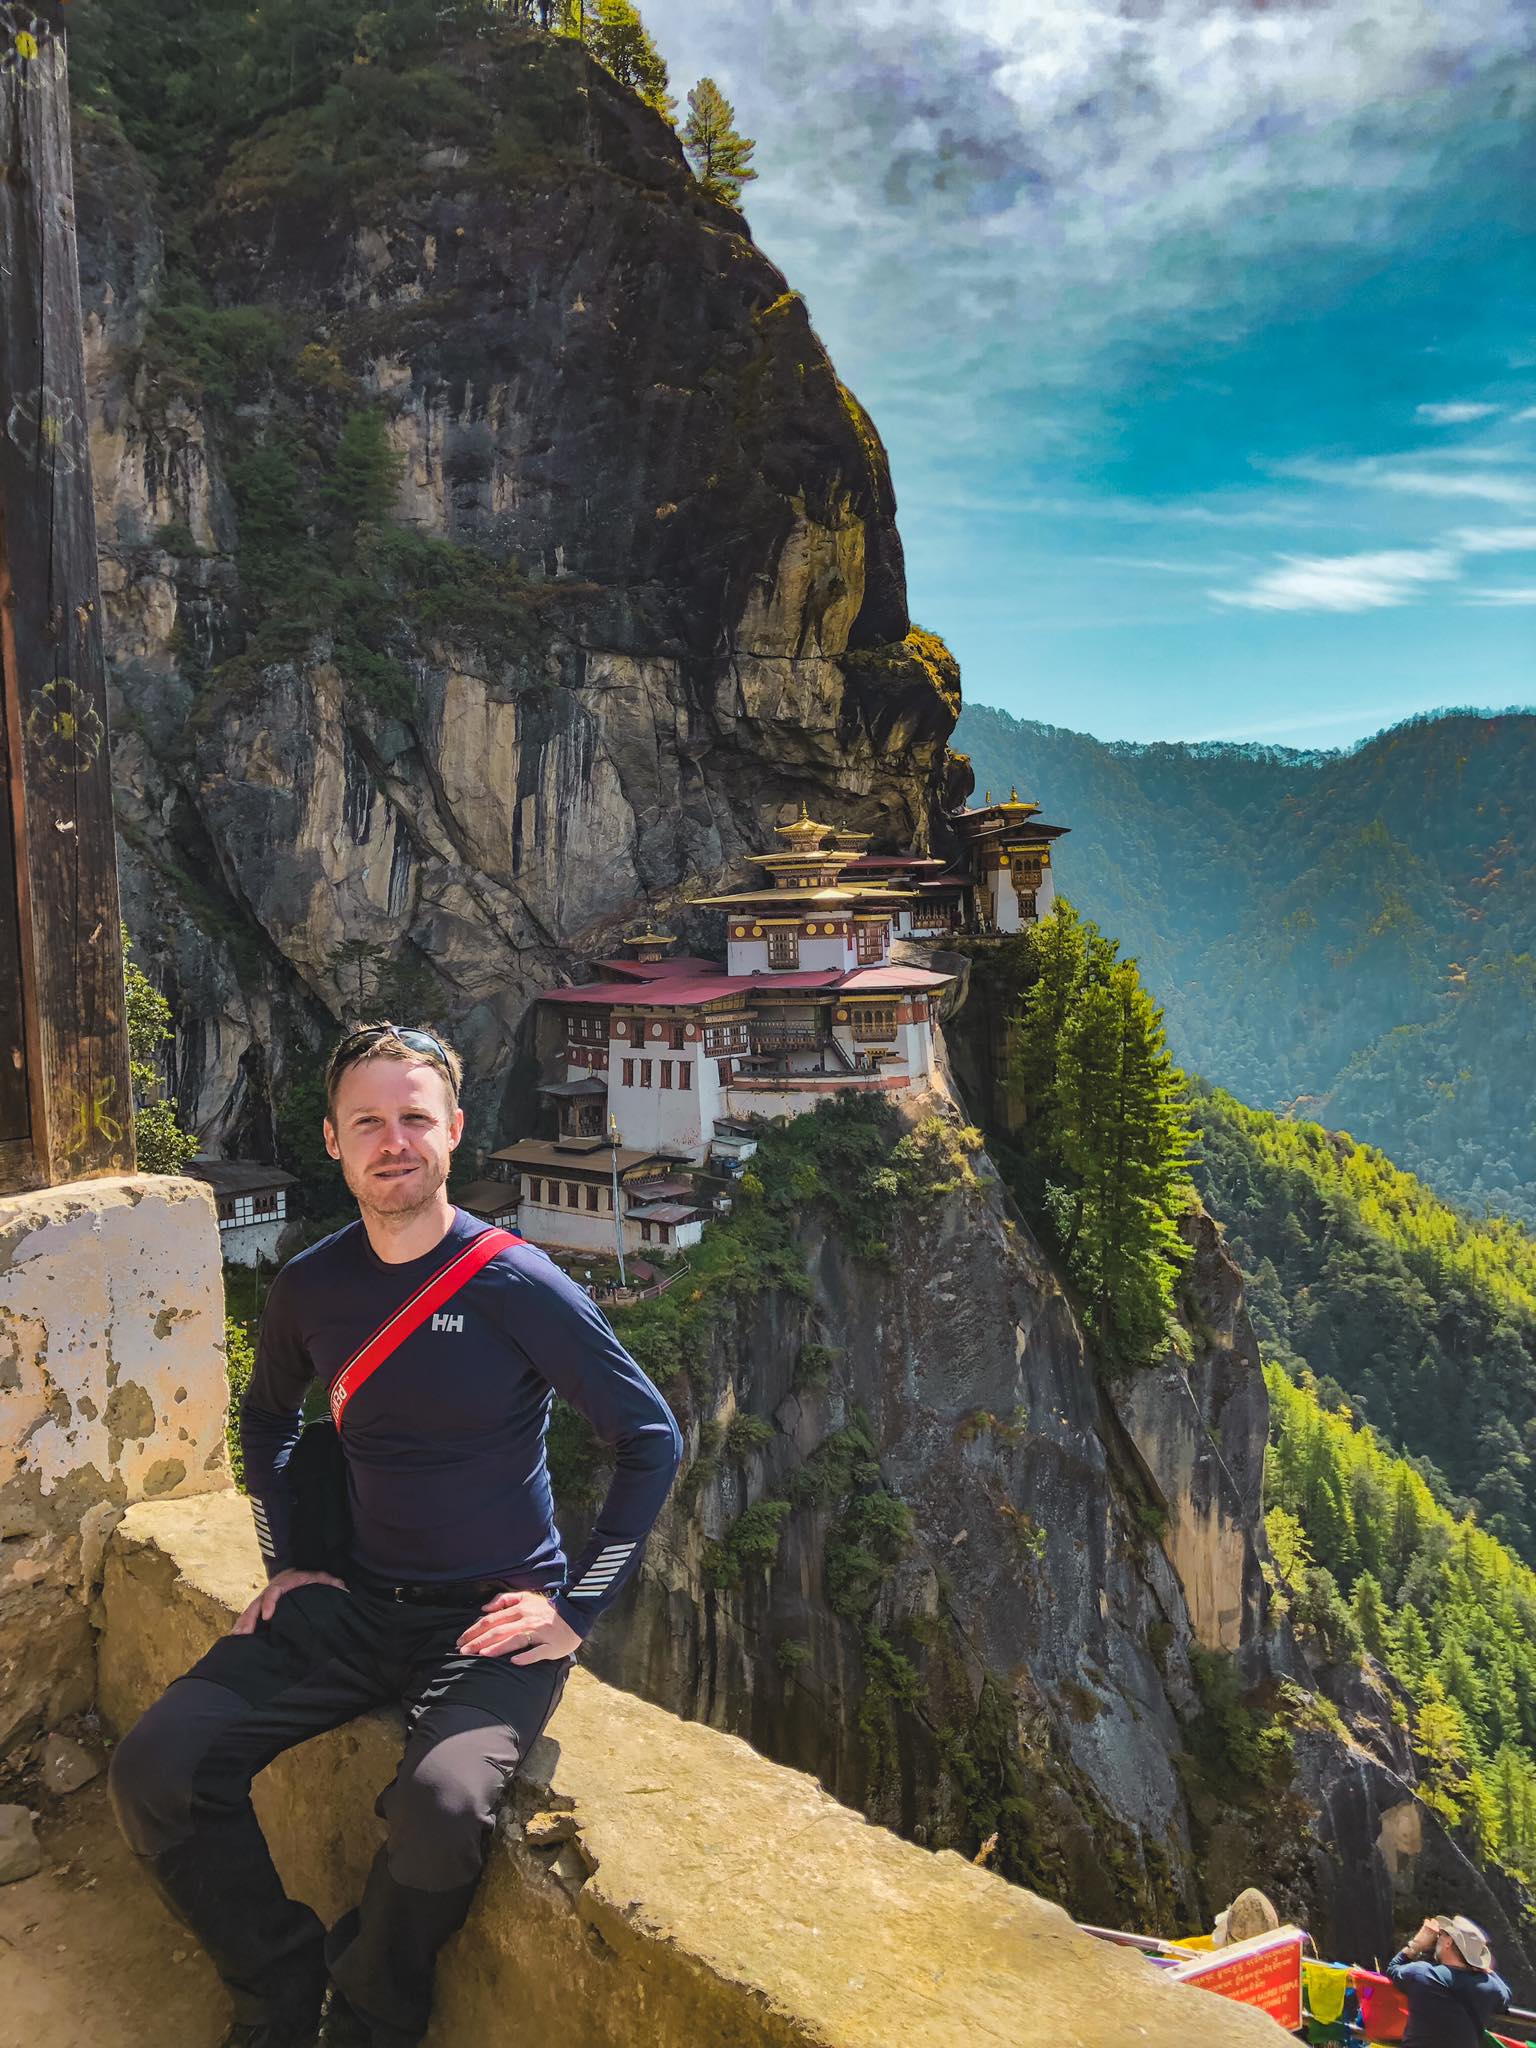 Things to do in Bhutan